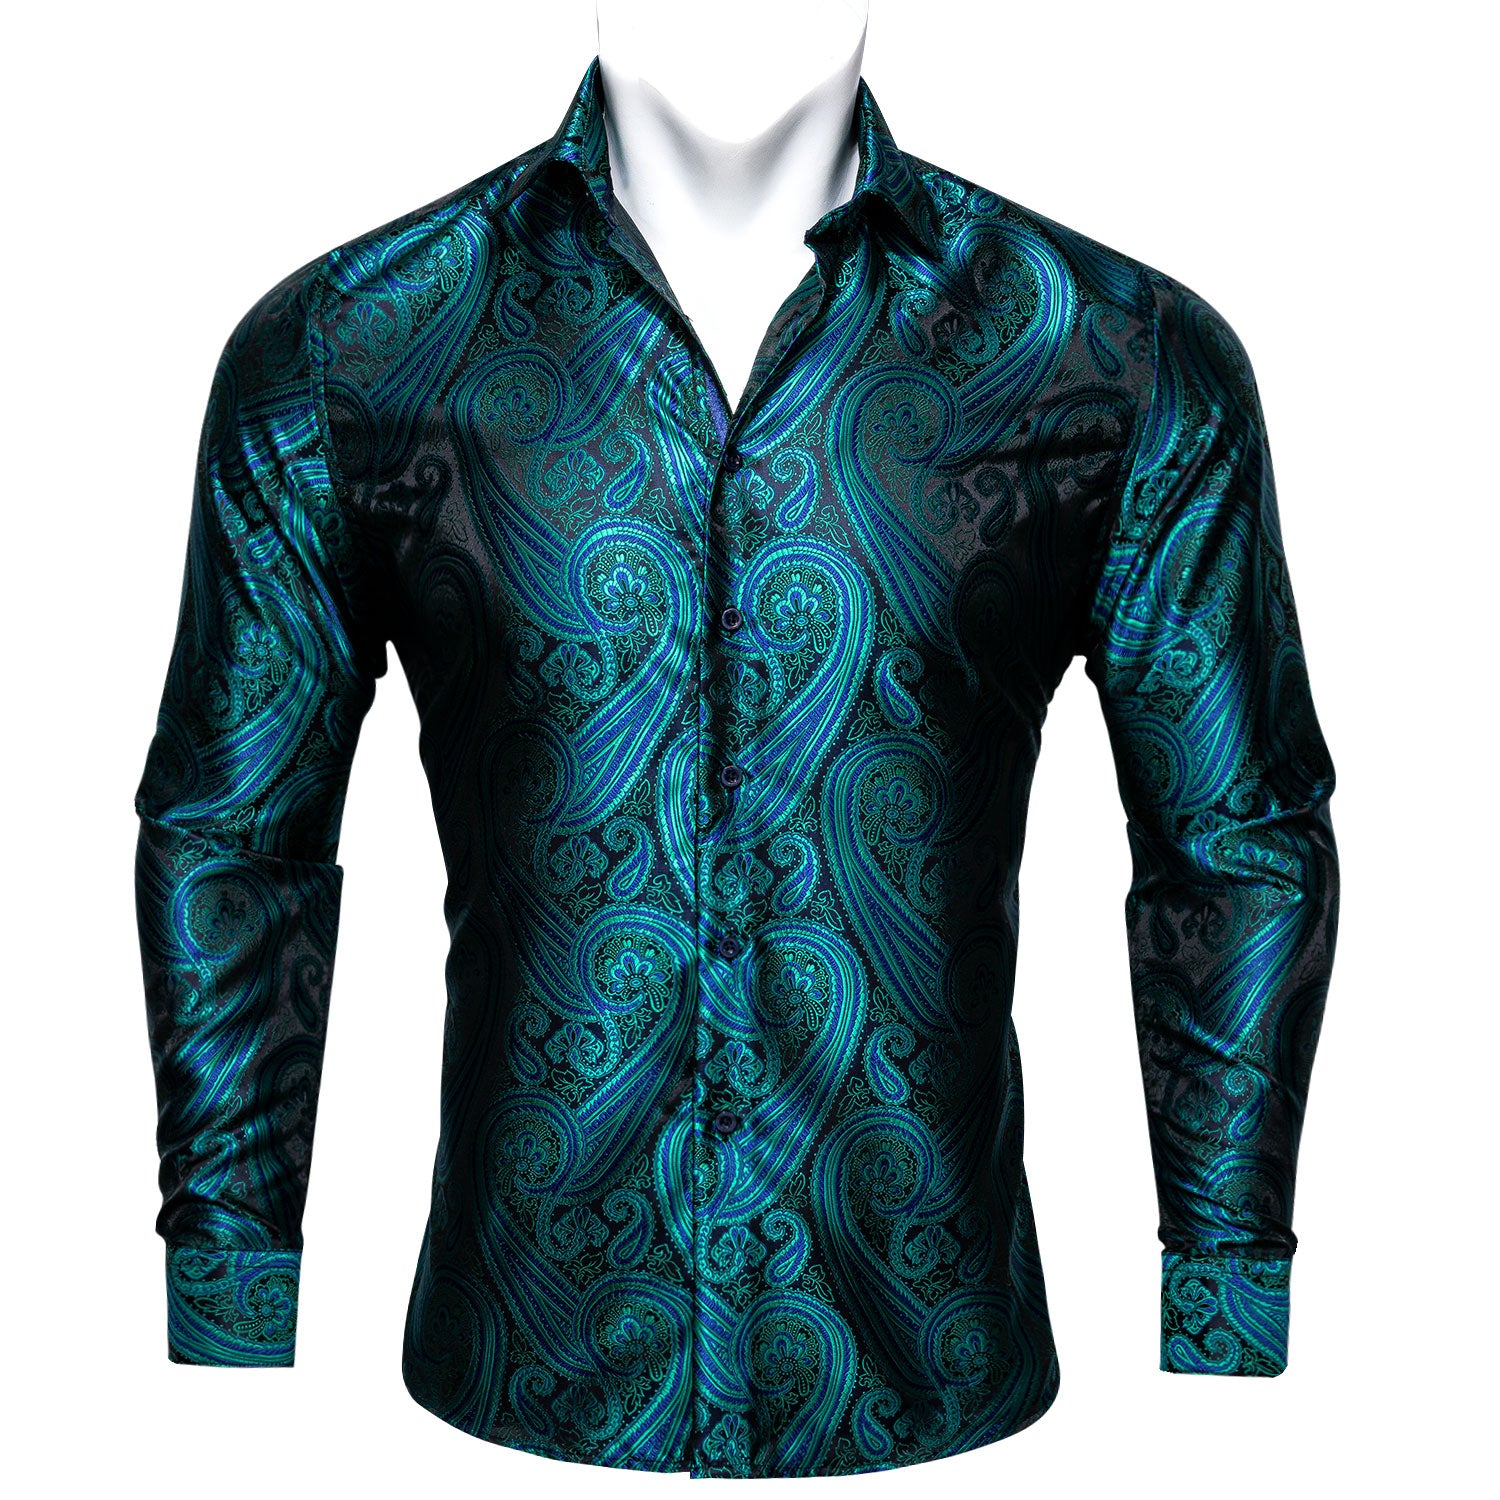 Teal blue black jacquard paisley modern fit dress shirt